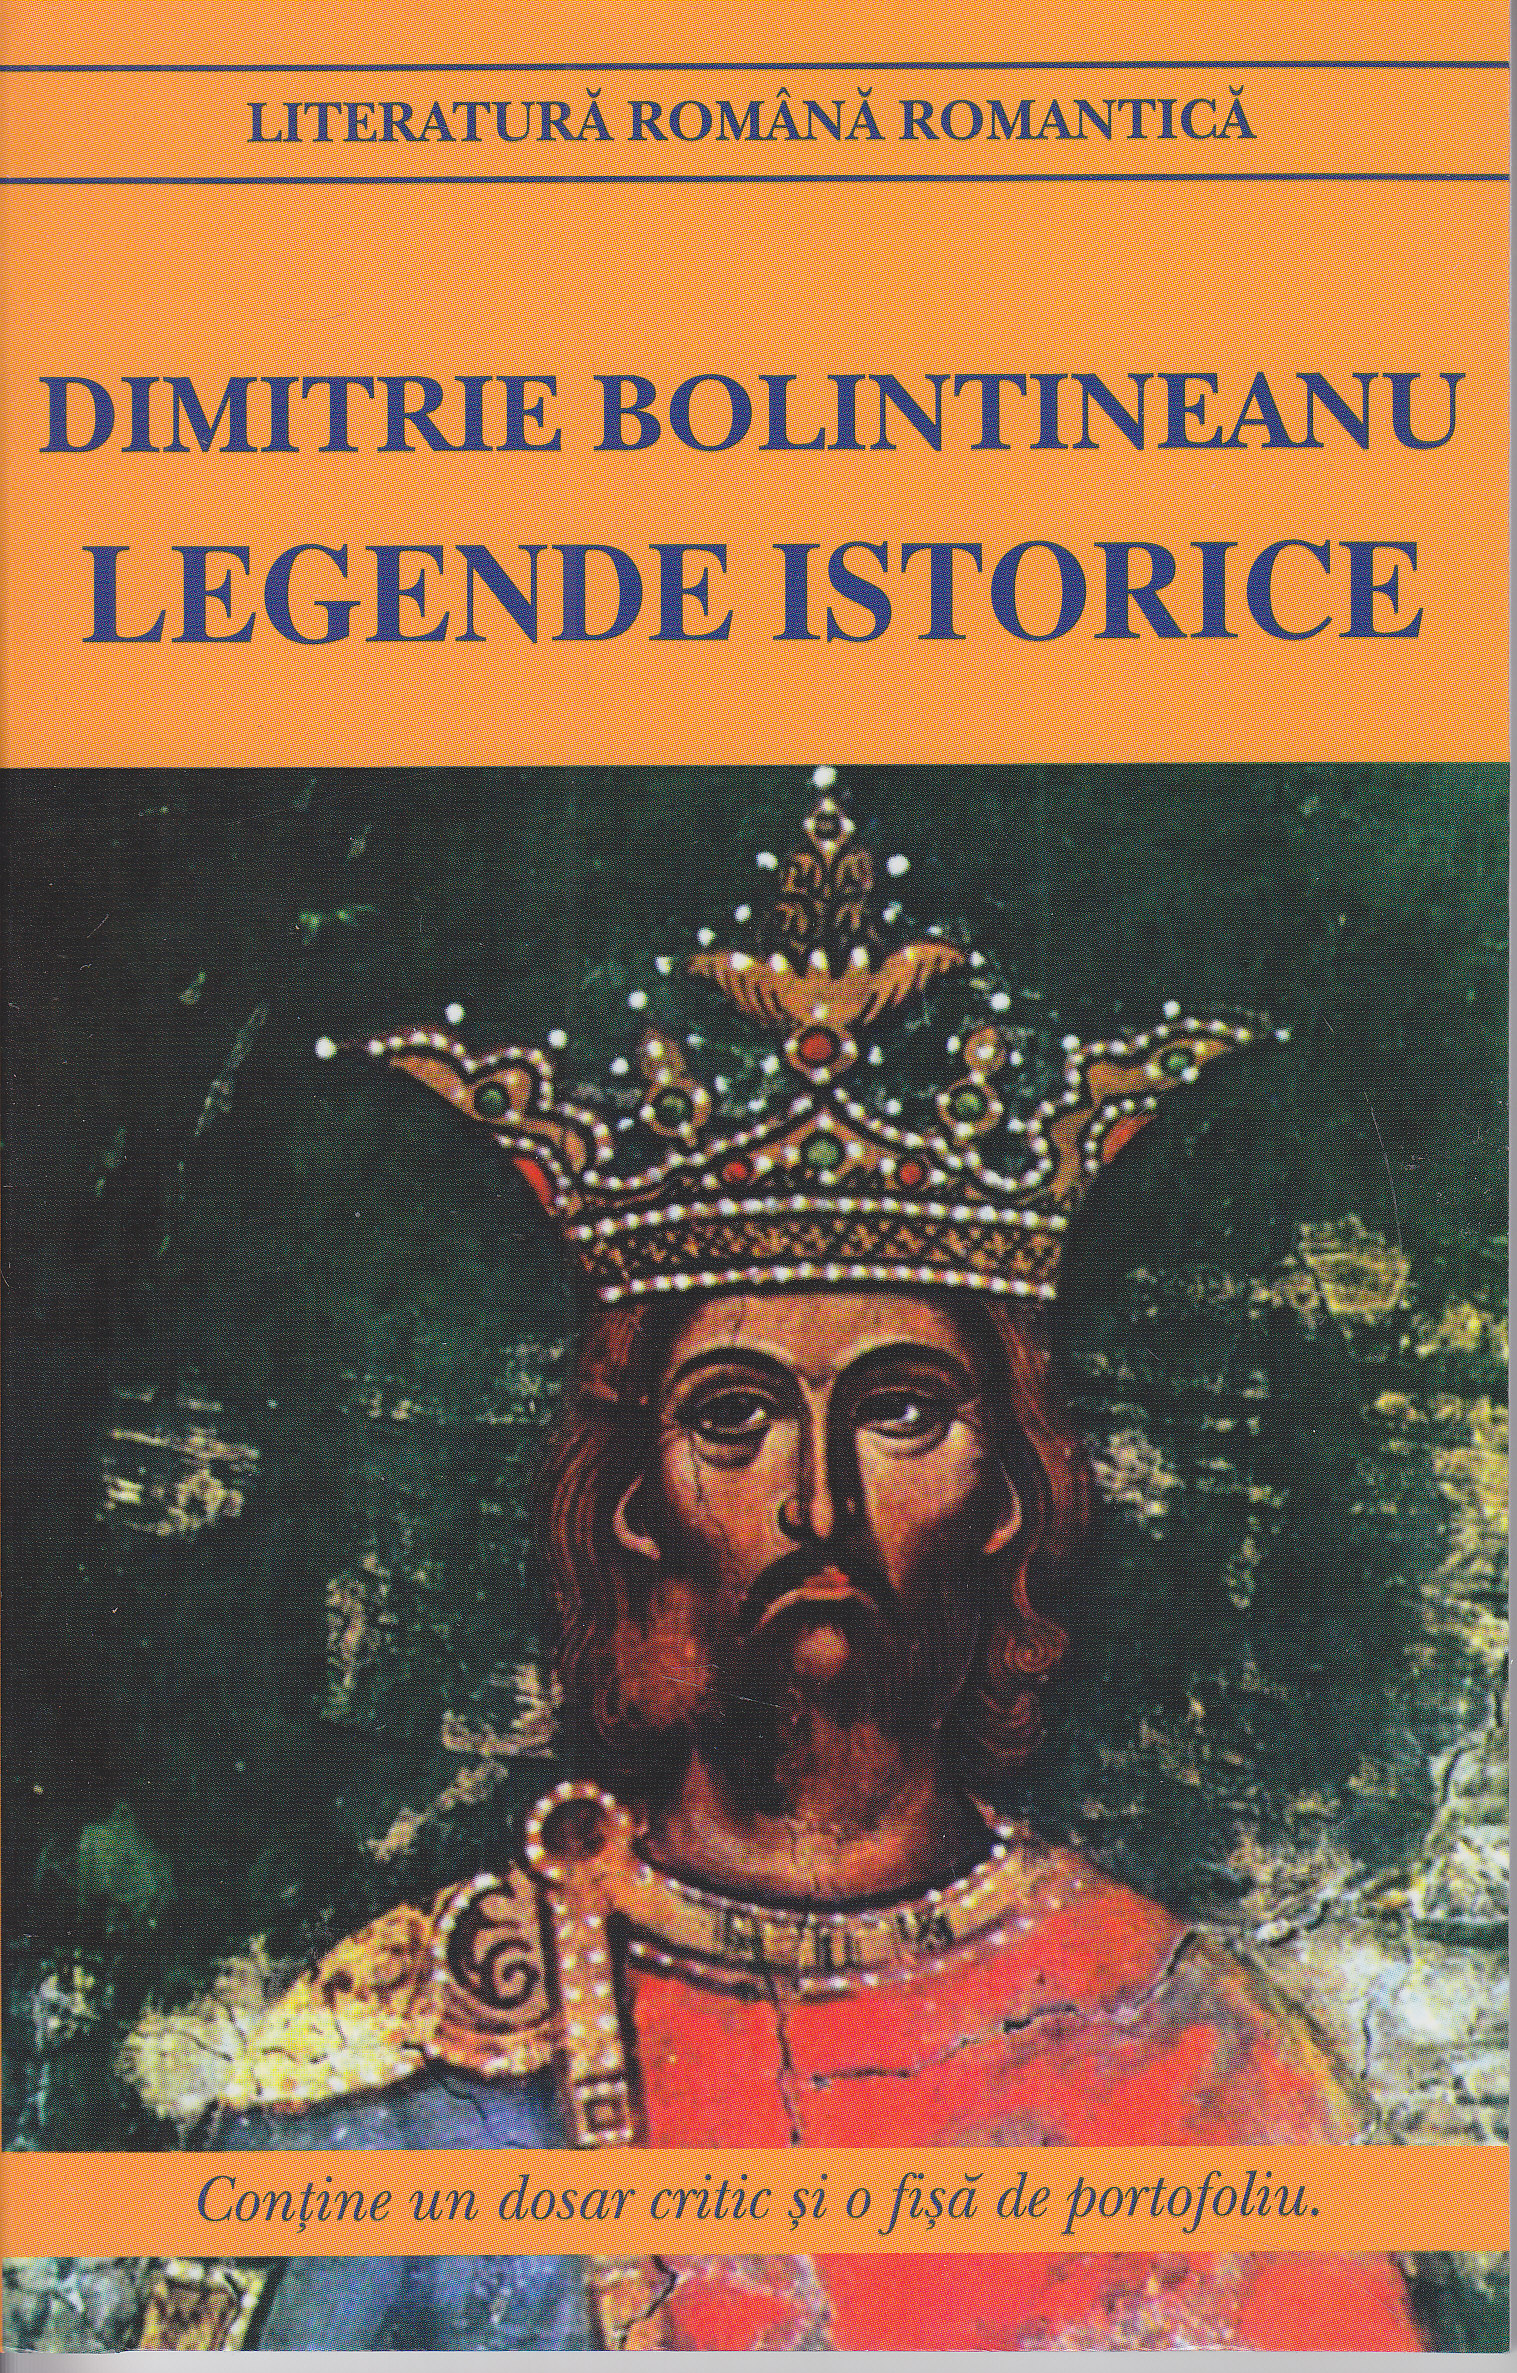 Legende istorice - Dimitrie Bolintineanu